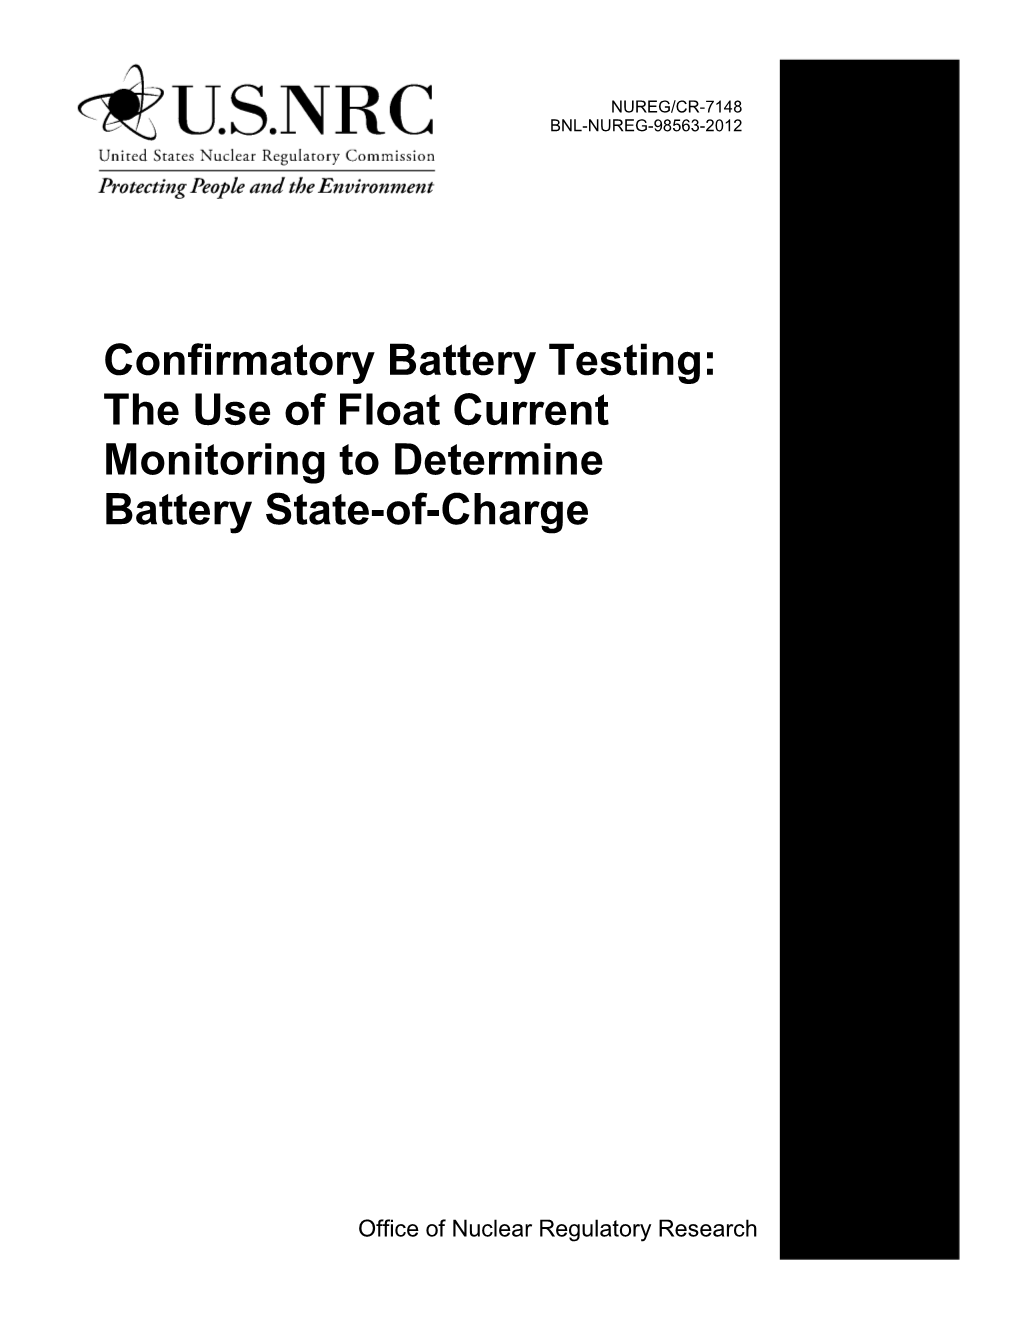 NUREG/CR-7148, "Confirmatory Battery Testing: the Use of Float